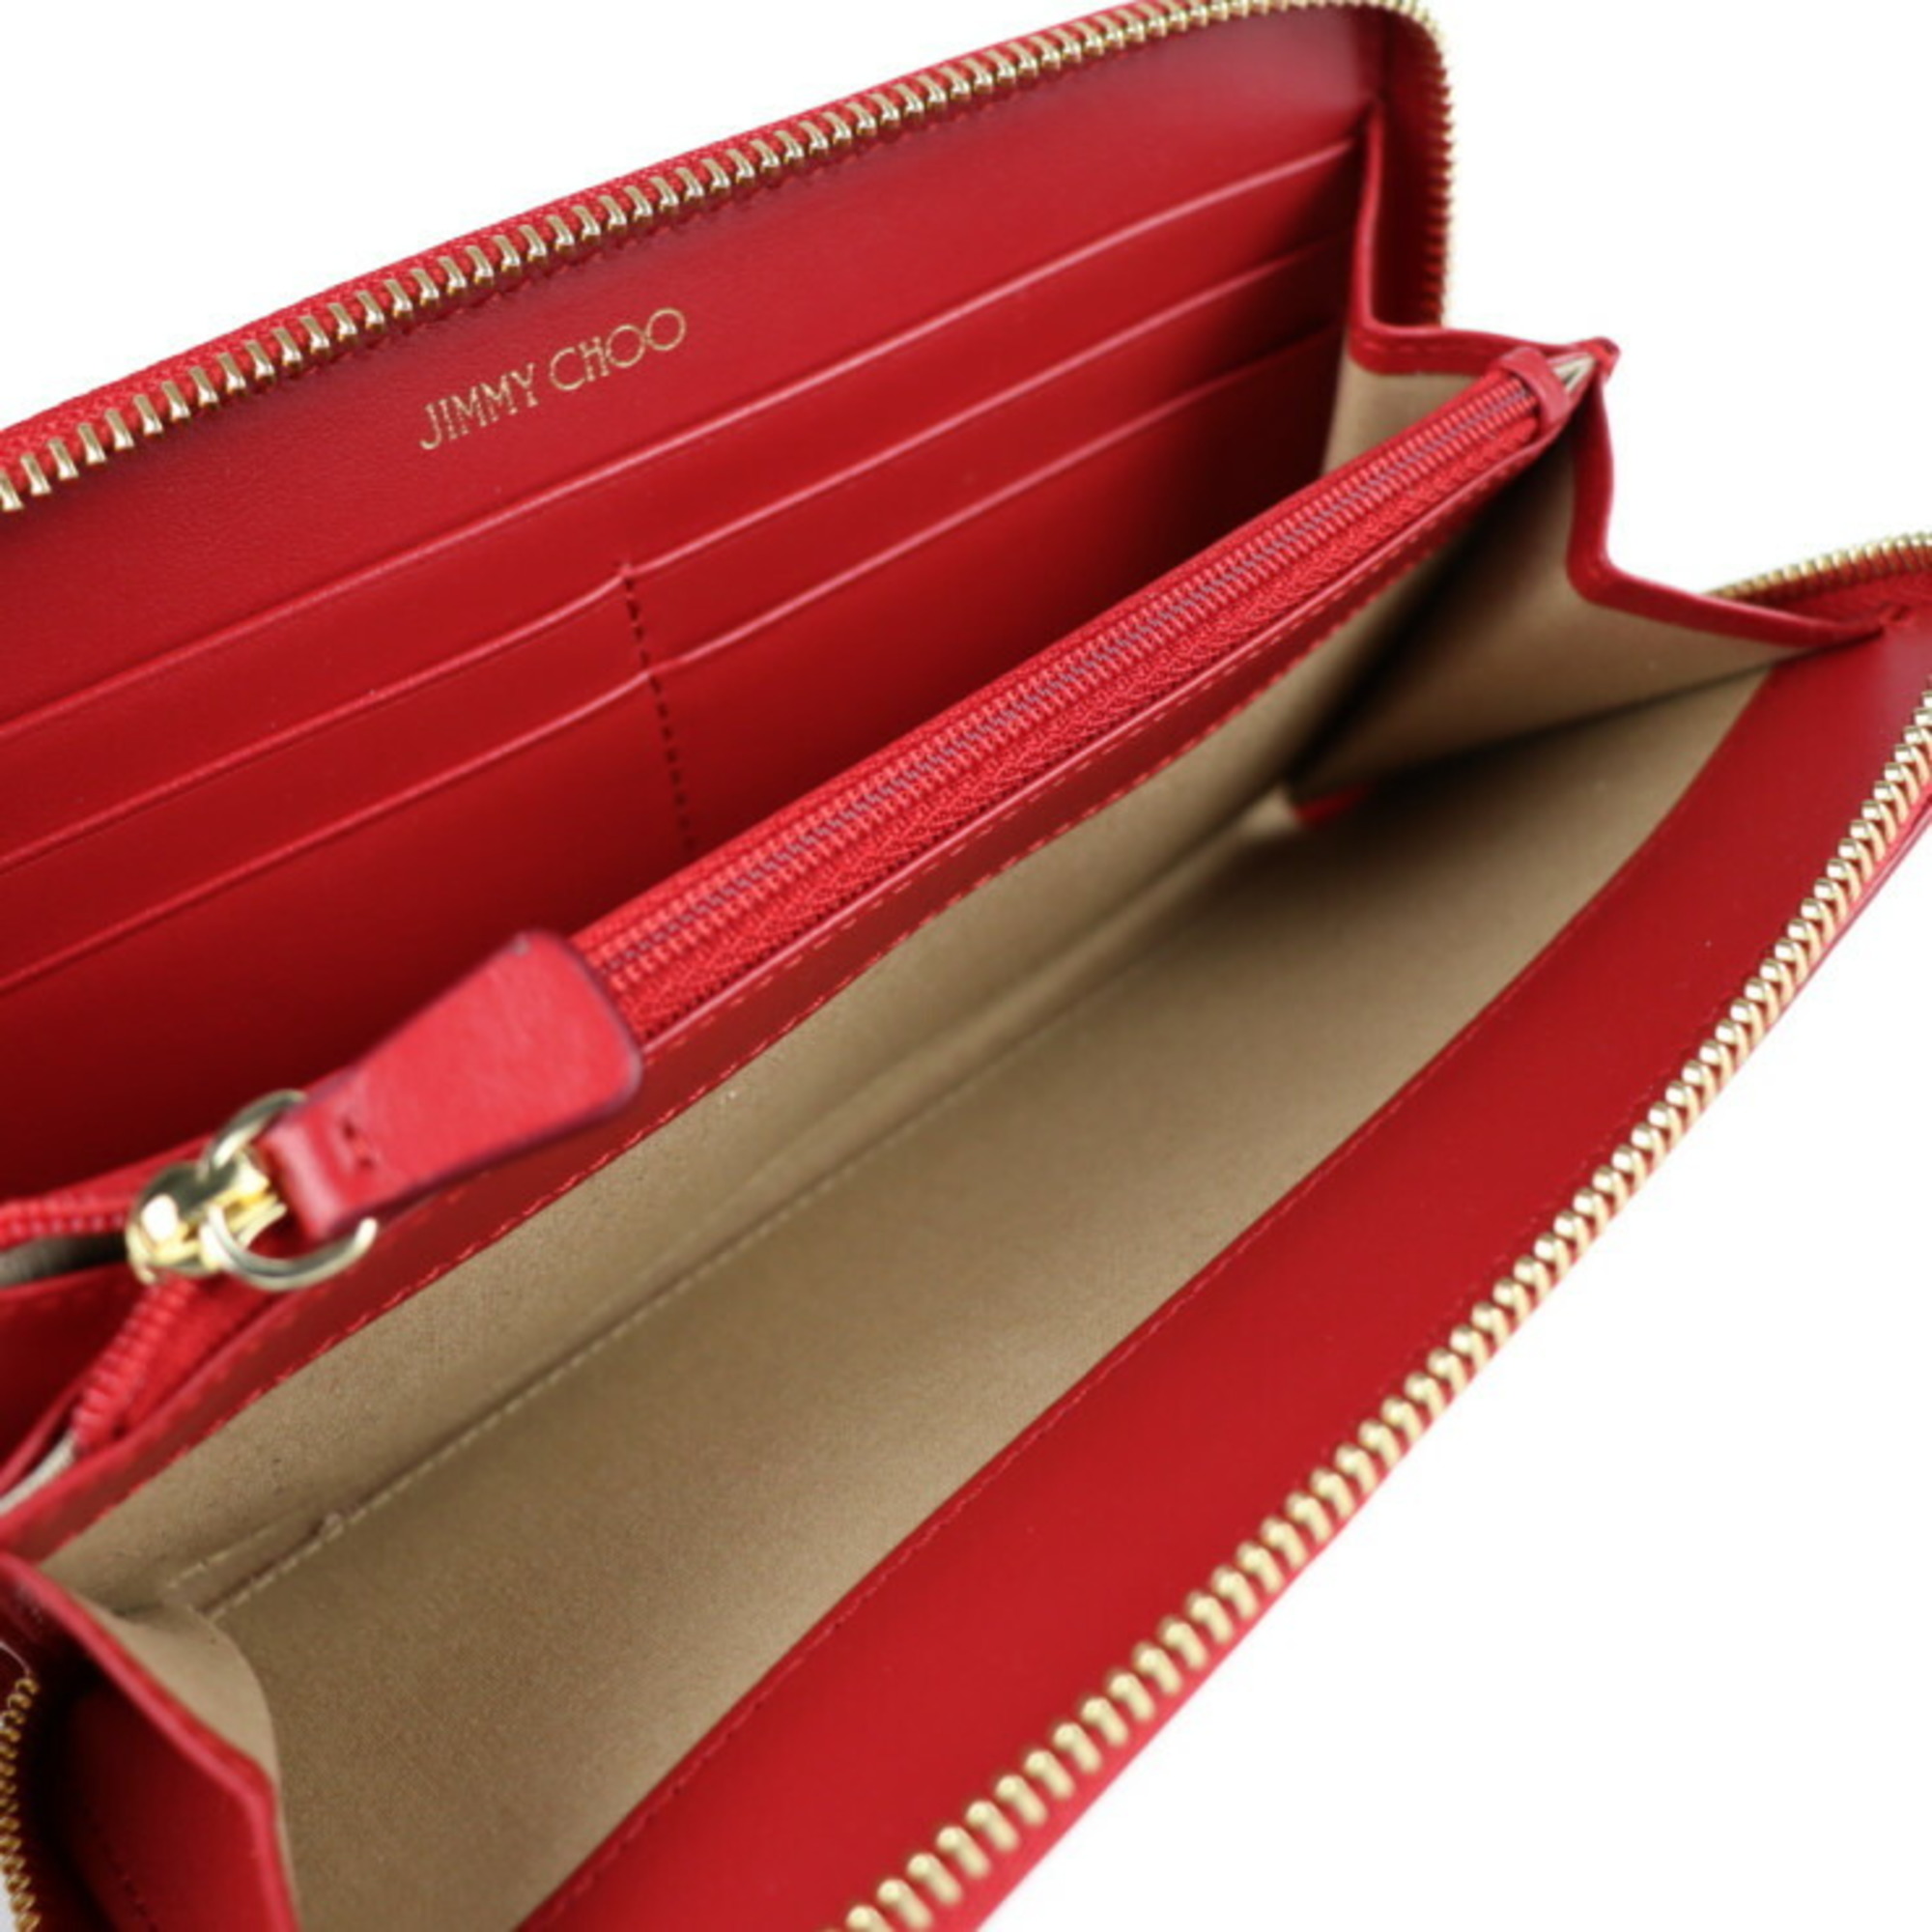 JIMMY CHOO Jimmy Choo ATHINI ZIP long wallet leather red gold metal fittings round fastener tassel